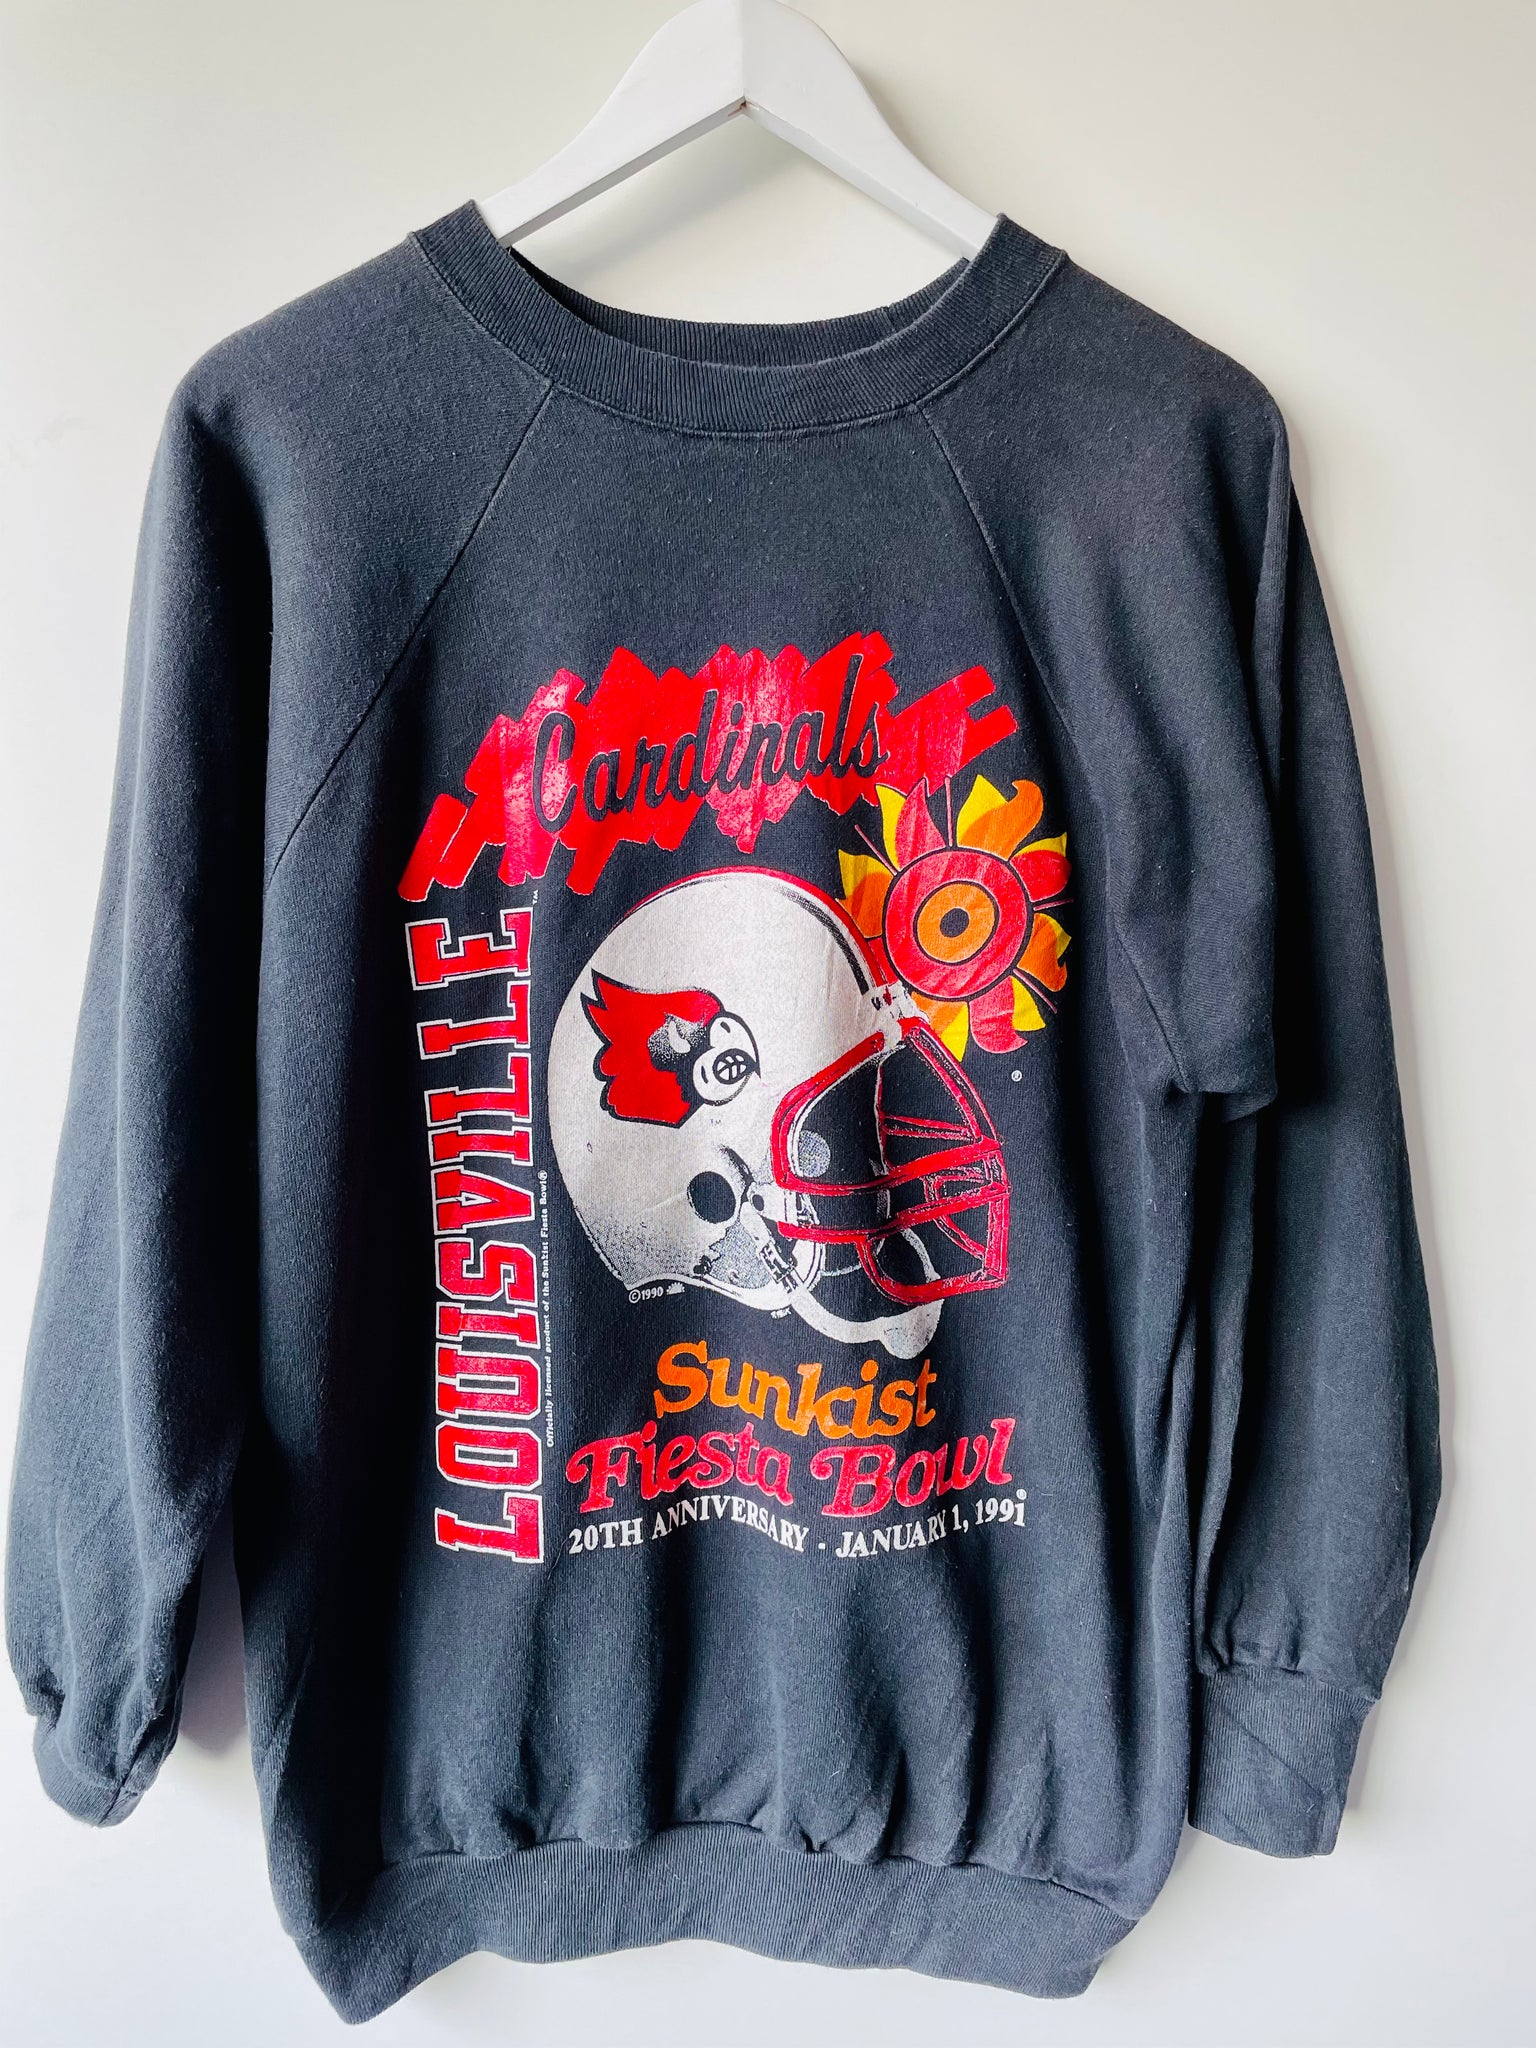 Vintage 1990s USA Louisville Cardinals sweatshirt L – Beatnik Emporium